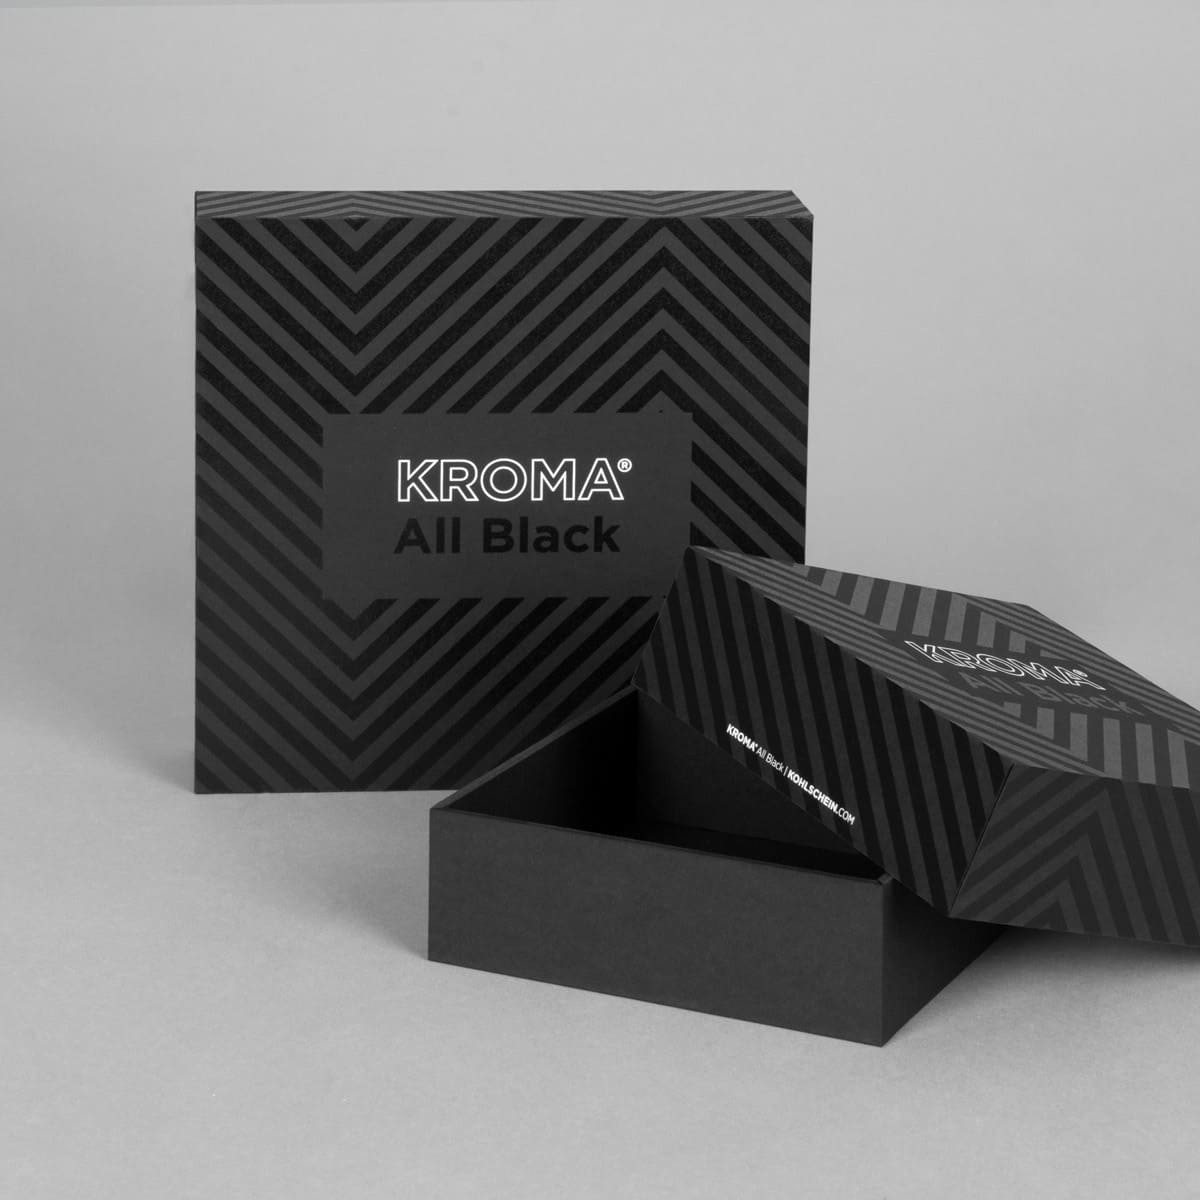 Produktverpackungen Schachteln aus KROMA All Black